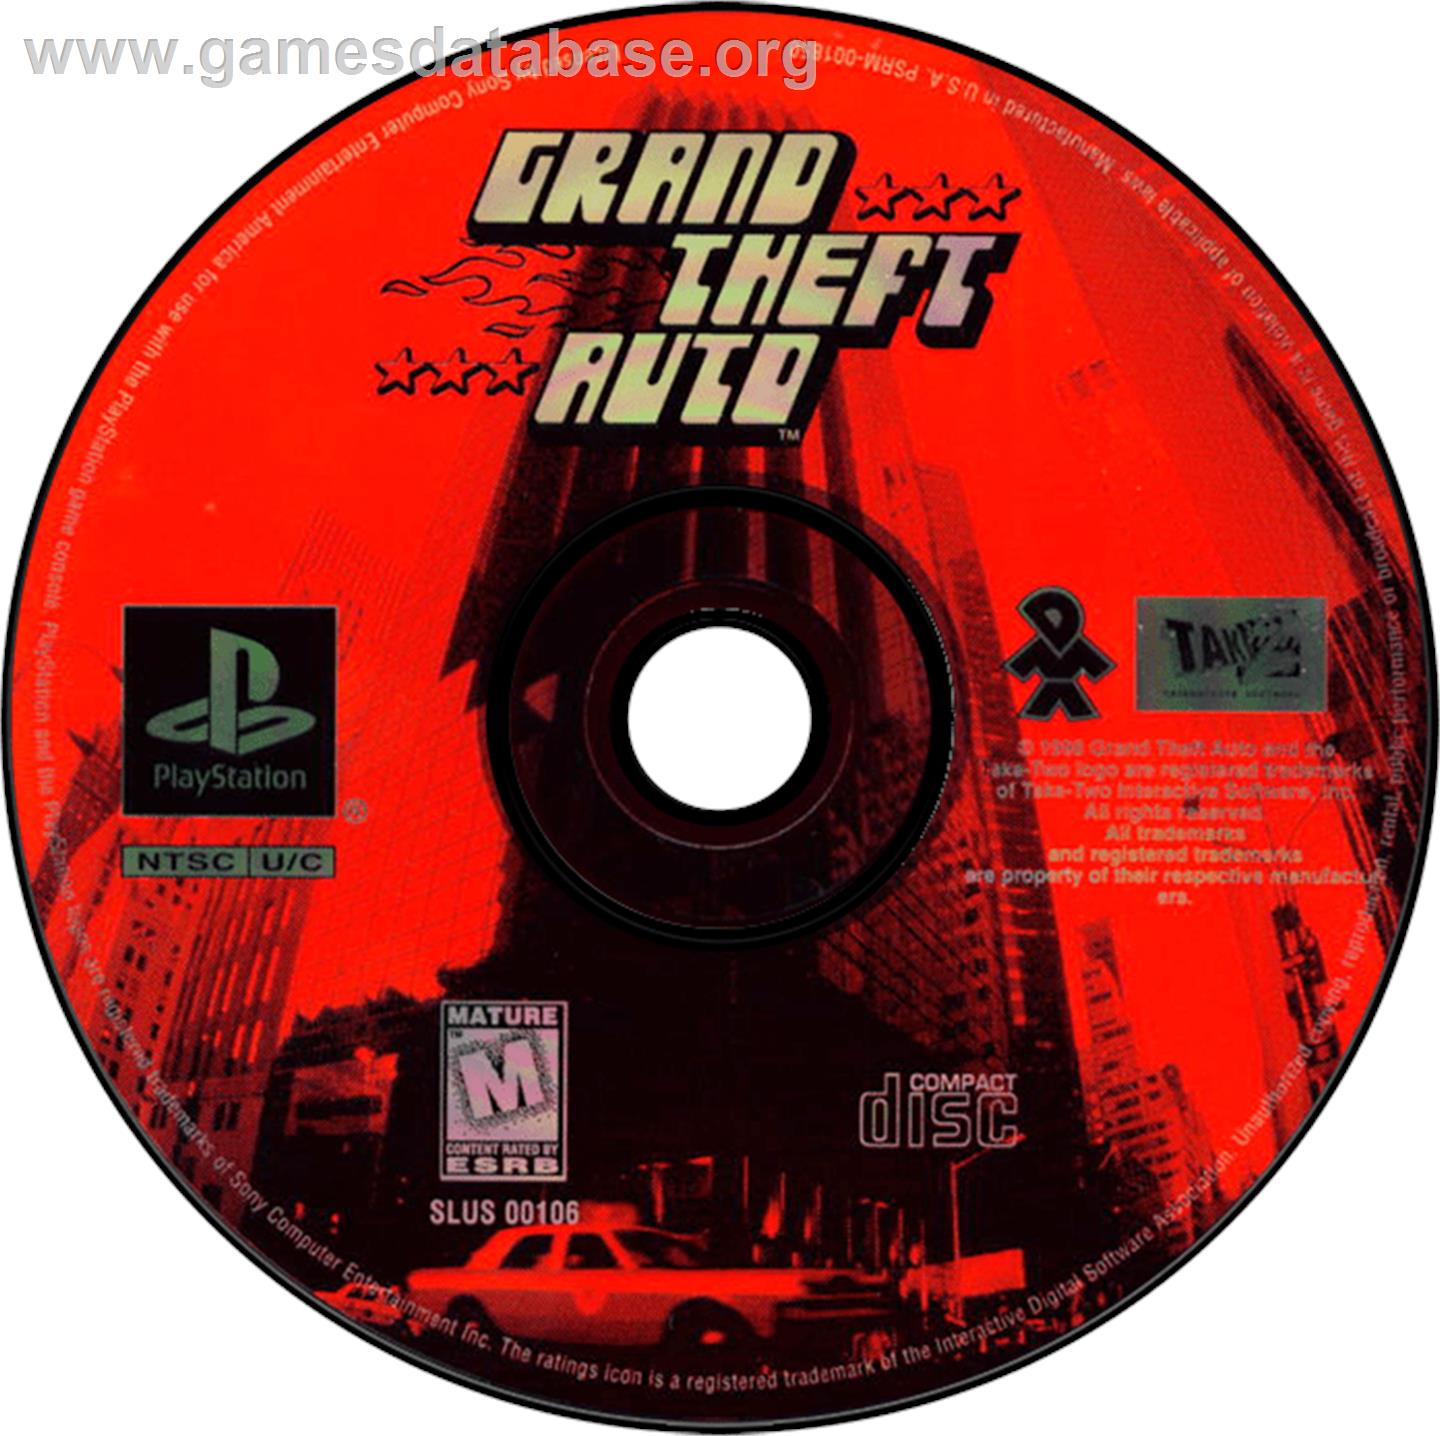 Grand Theft Auto - Sony Playstation - Artwork - Disc